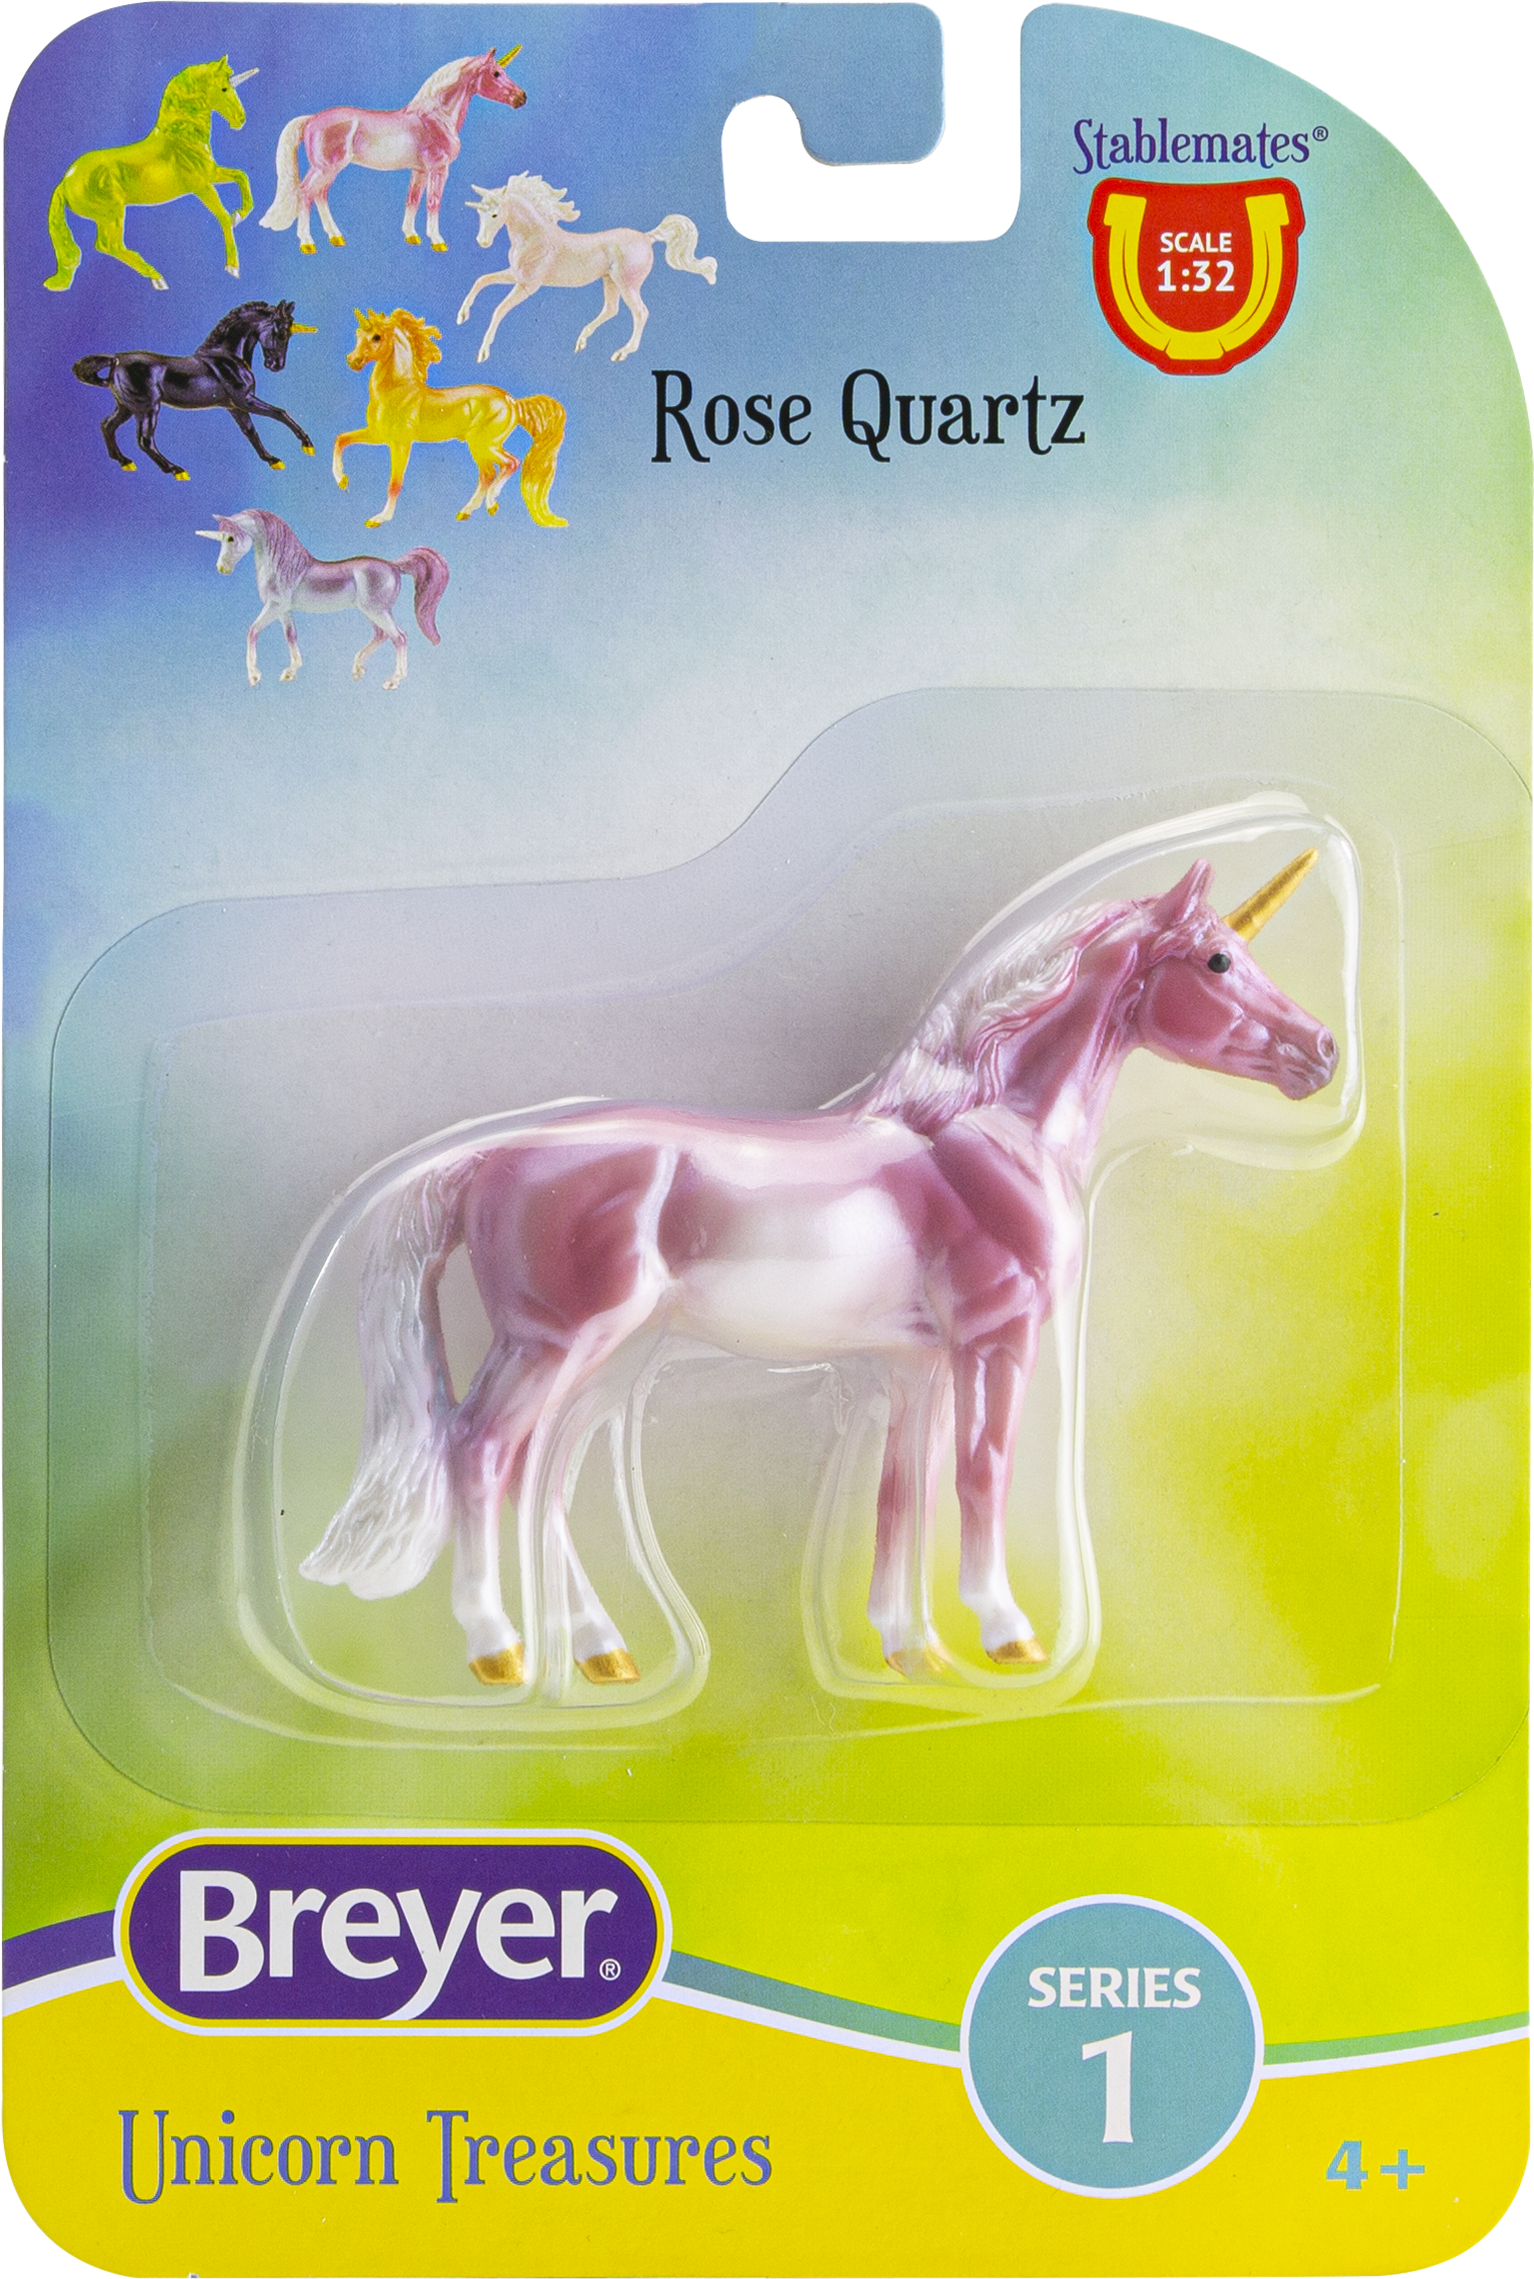 Breyer Stablemates Unicorn Single - Rose